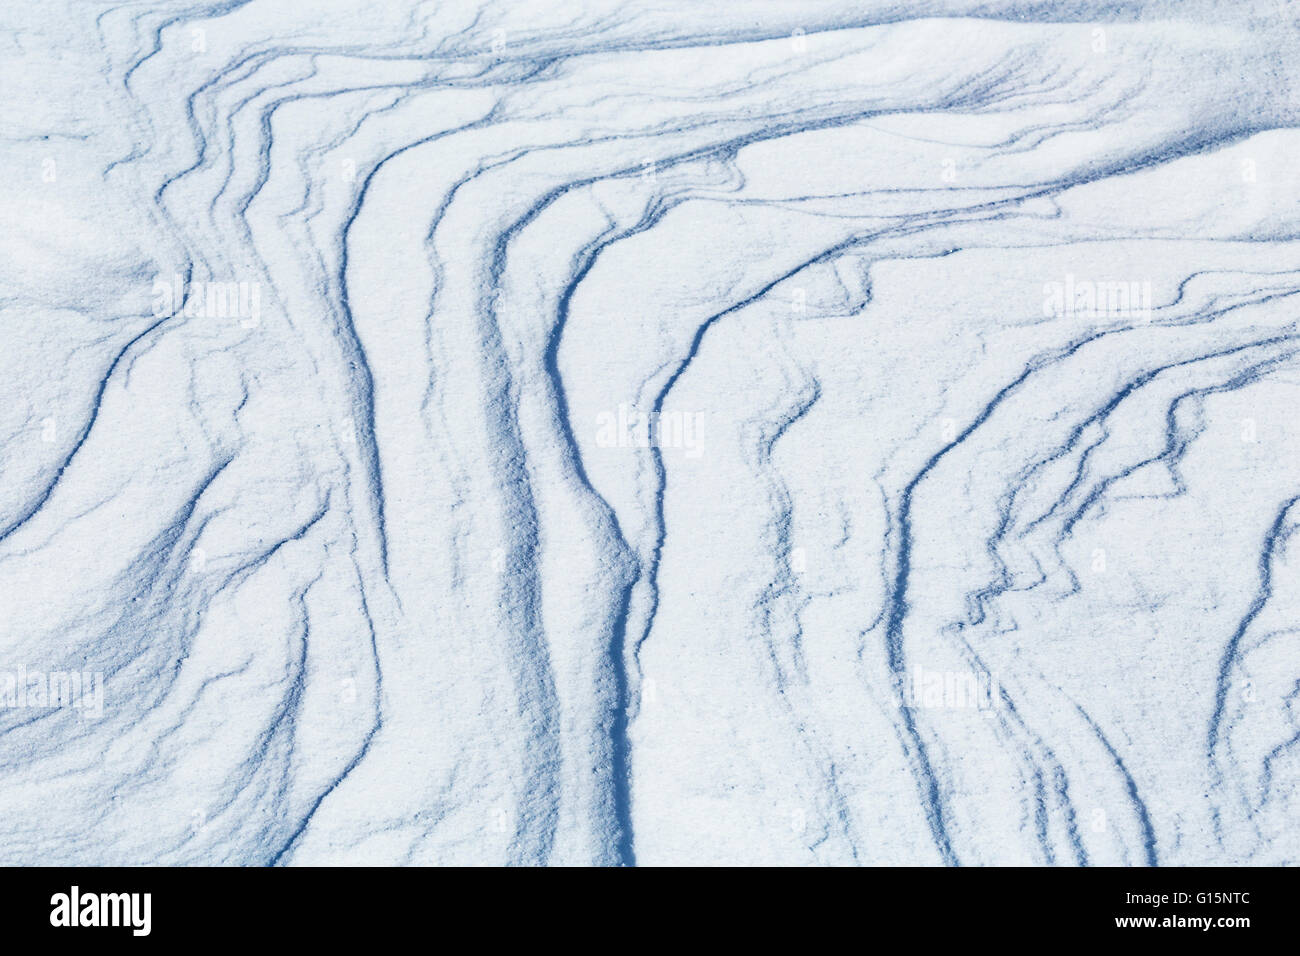 Schnee-Muster auf einem zugefrorenen See Adler, Sundridge, Ontario, Kanada Stockfoto